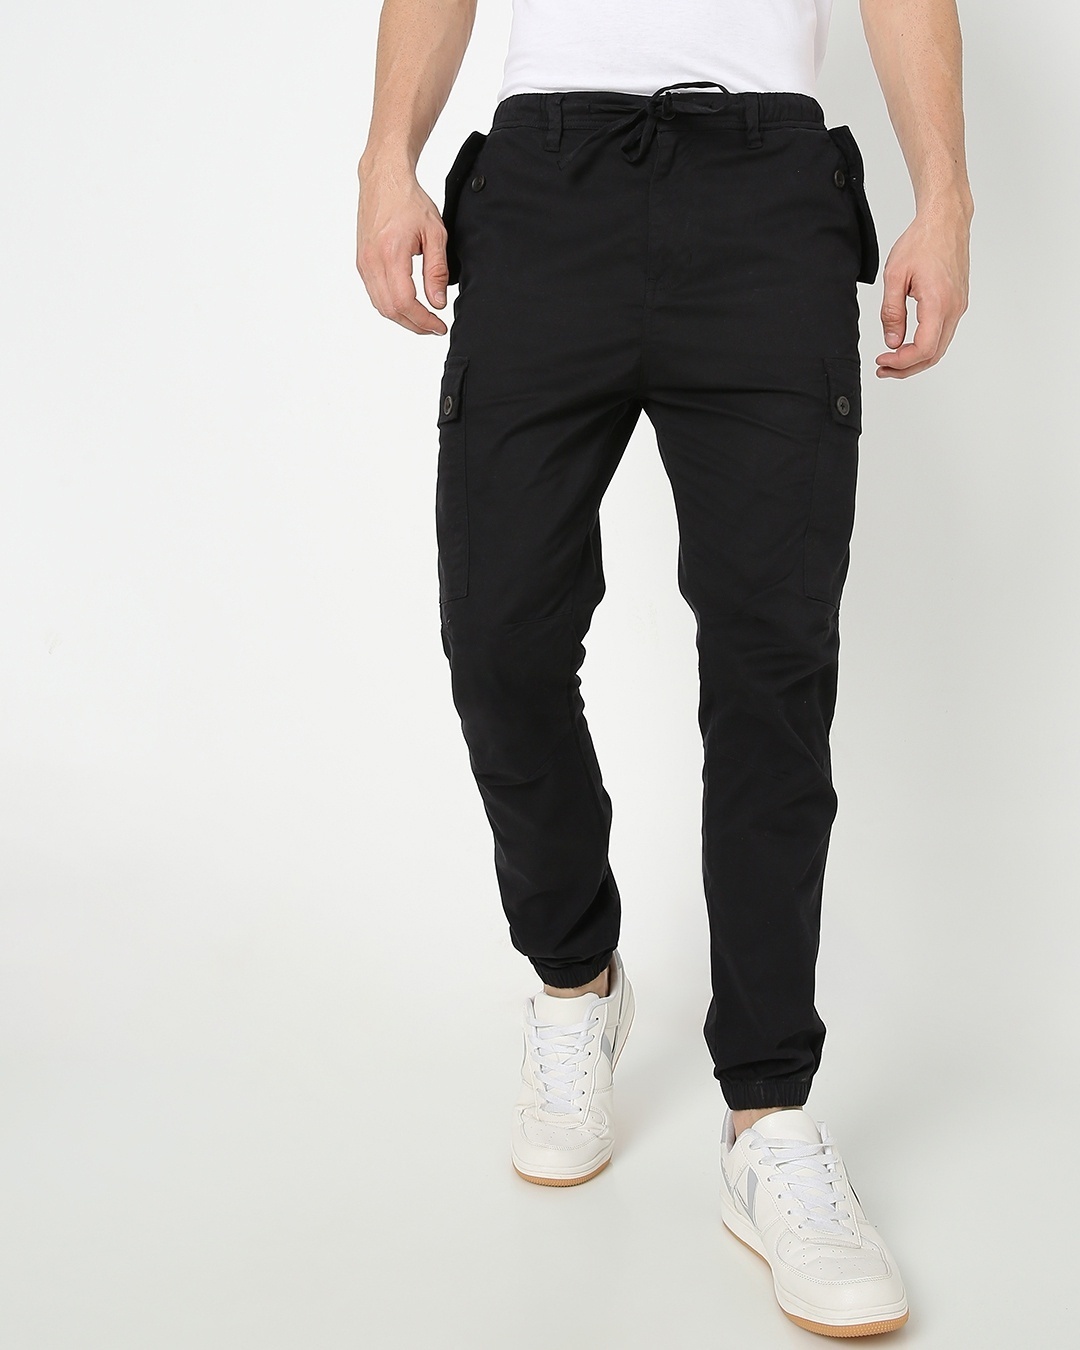 Buy Men's Black Snap Pocket Cargo Pants for Men black Online at Bewakoof